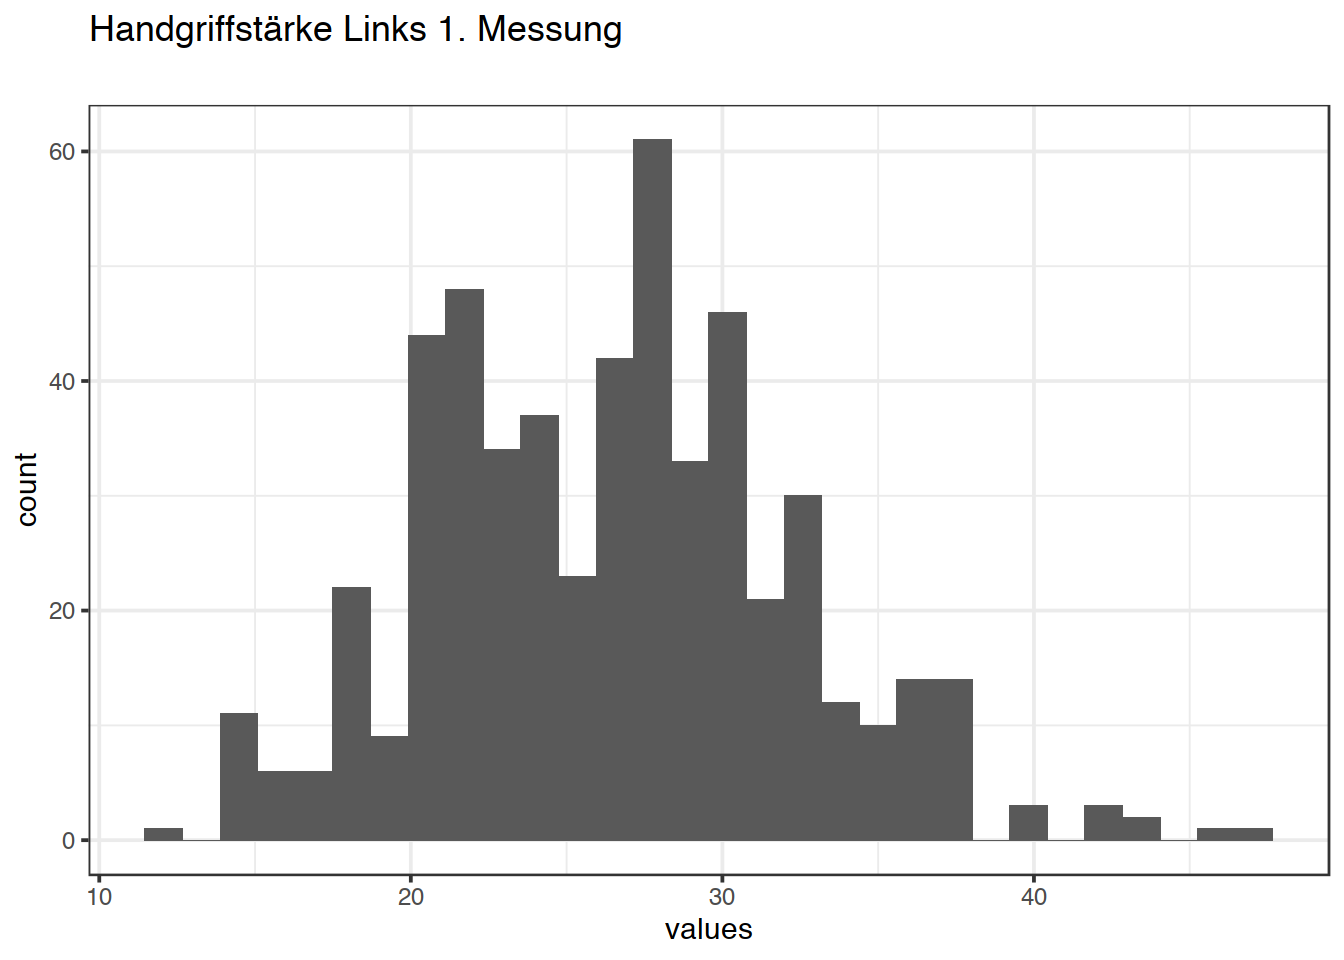 Distribution of values for Handgriffstärke Links 1. Messung